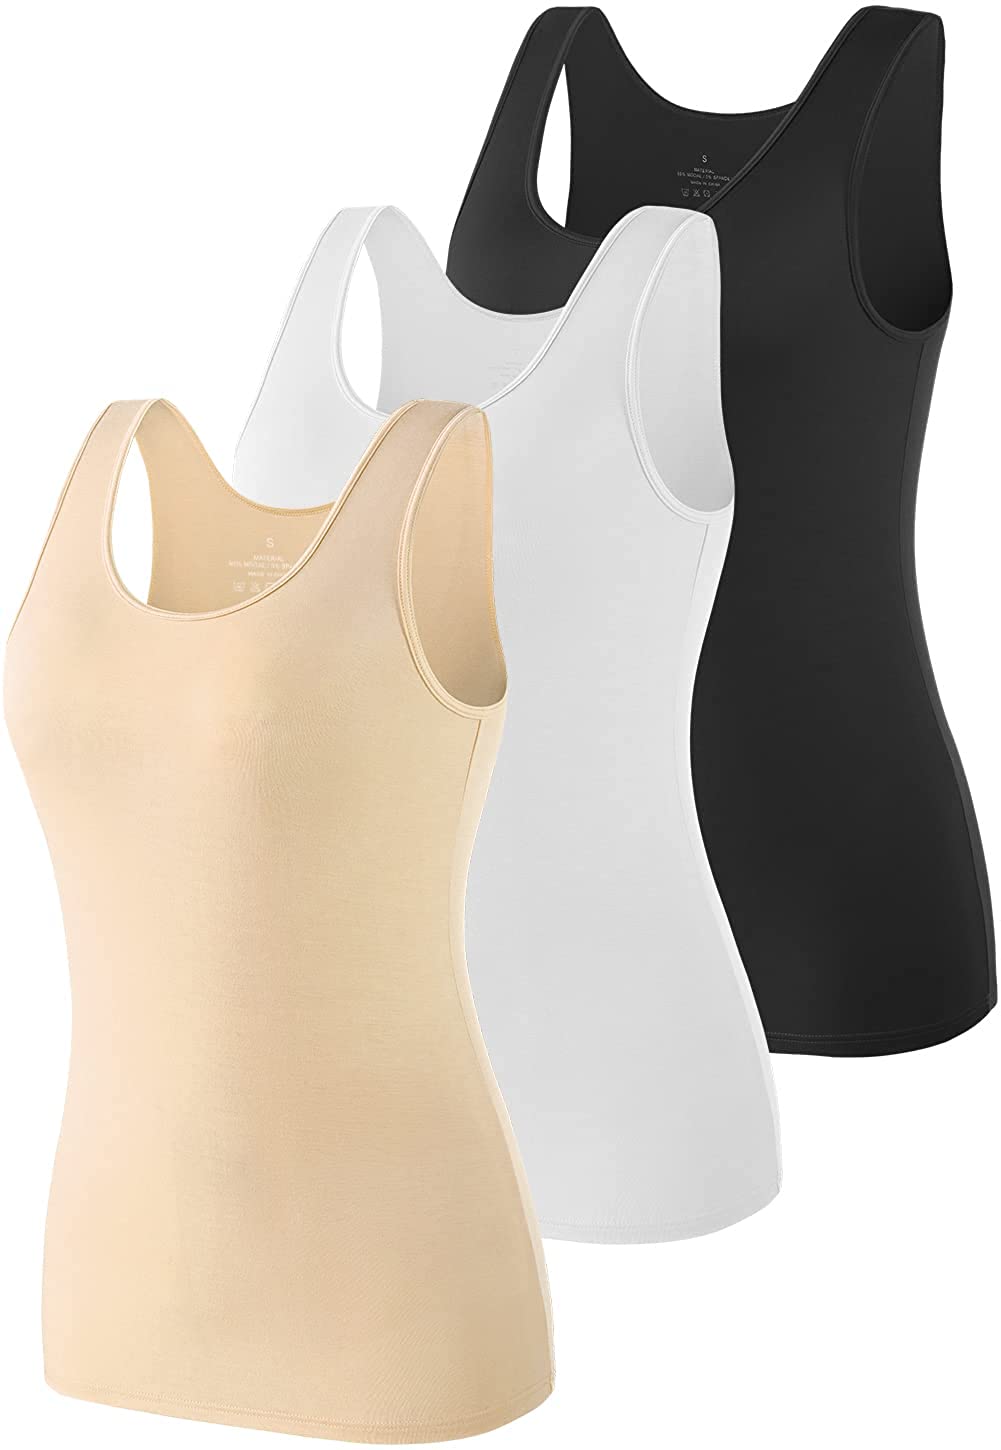 AMVELOP Basic Tank Top for Women Undershirts Sleeveless Layering Tank Top  2-4 Pack Black Gray White Pink S at  Women's Clothing store